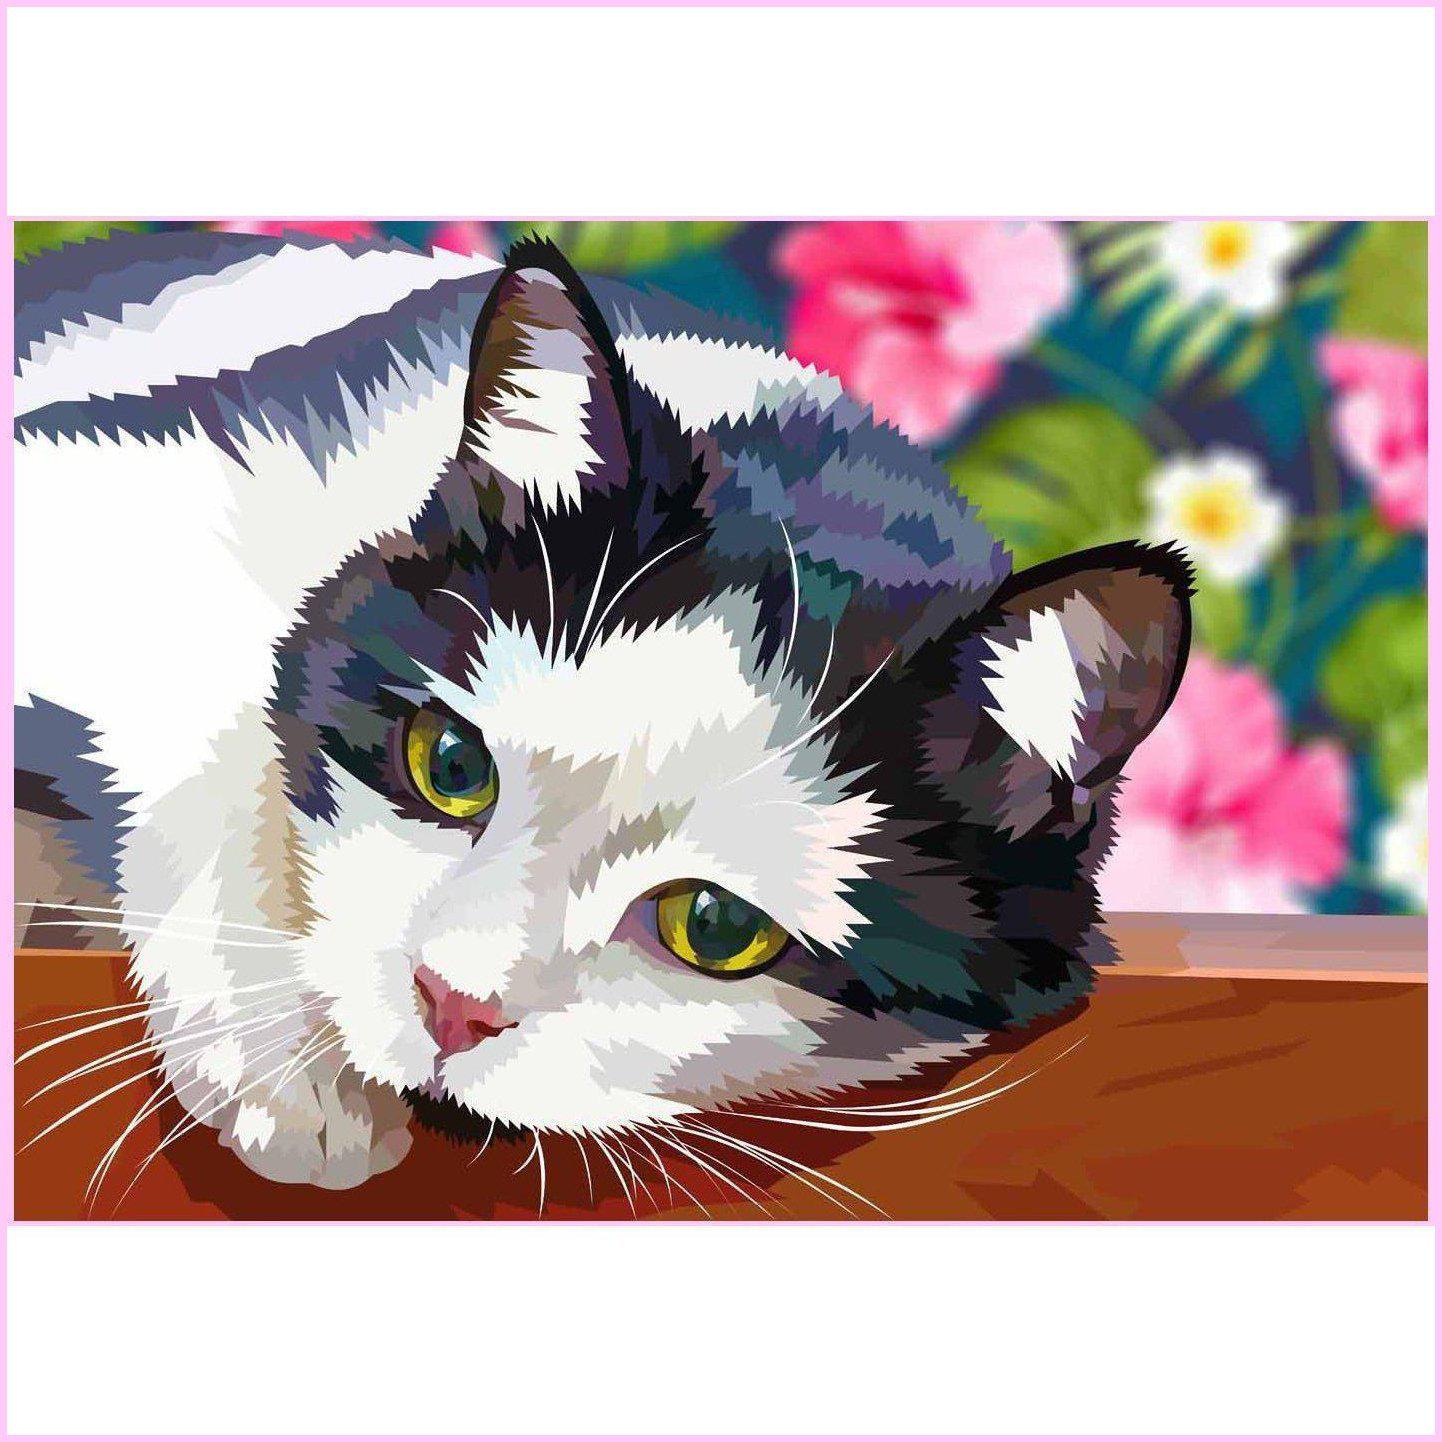 Valentines Day Heart Cat - Full Square - Diamond Painting(35*35cm)